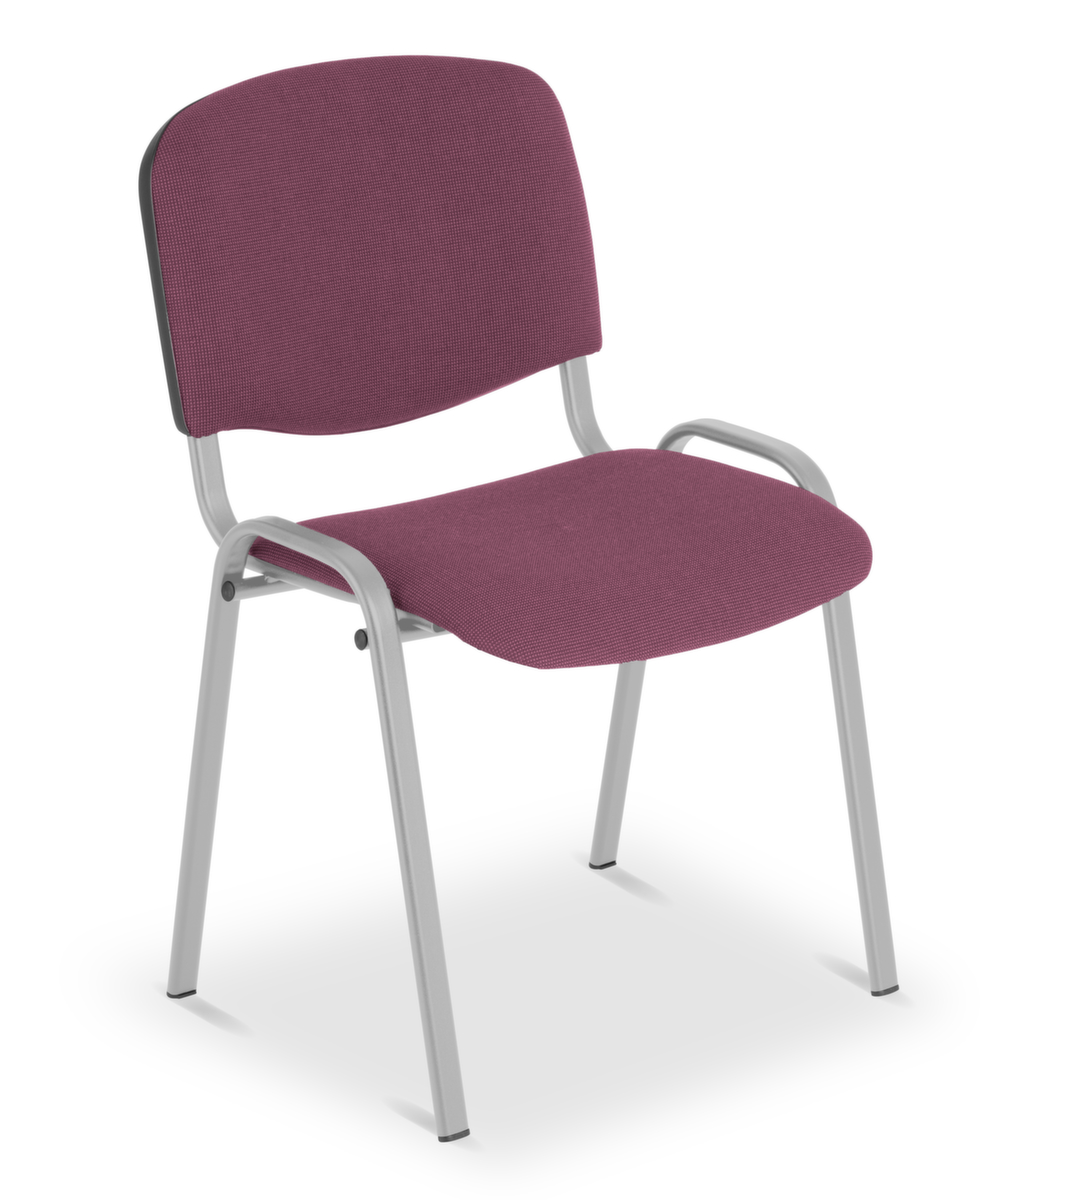 Nowy Styl 12-hoog stapelbare bezoekersstoel ISO met bekleding, zitting stof (100% polyolefine), bordeaux